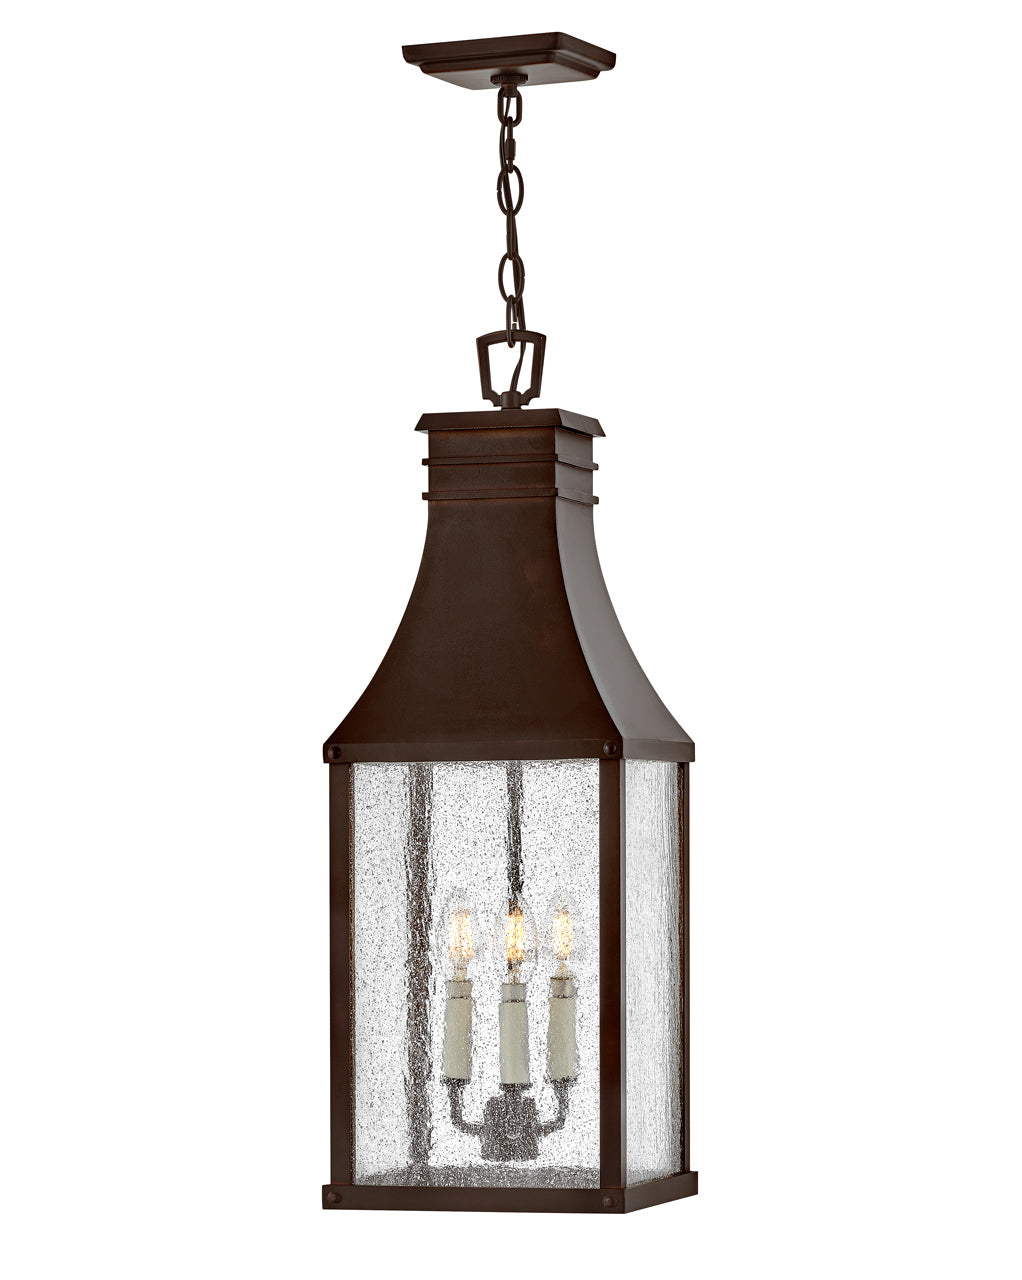 OUTDOOR BEACON HILL Hanging Lantern Outdoor Light Fixture l Hanging Hinkley Blackened Copper 8.0x9.0x25.5 